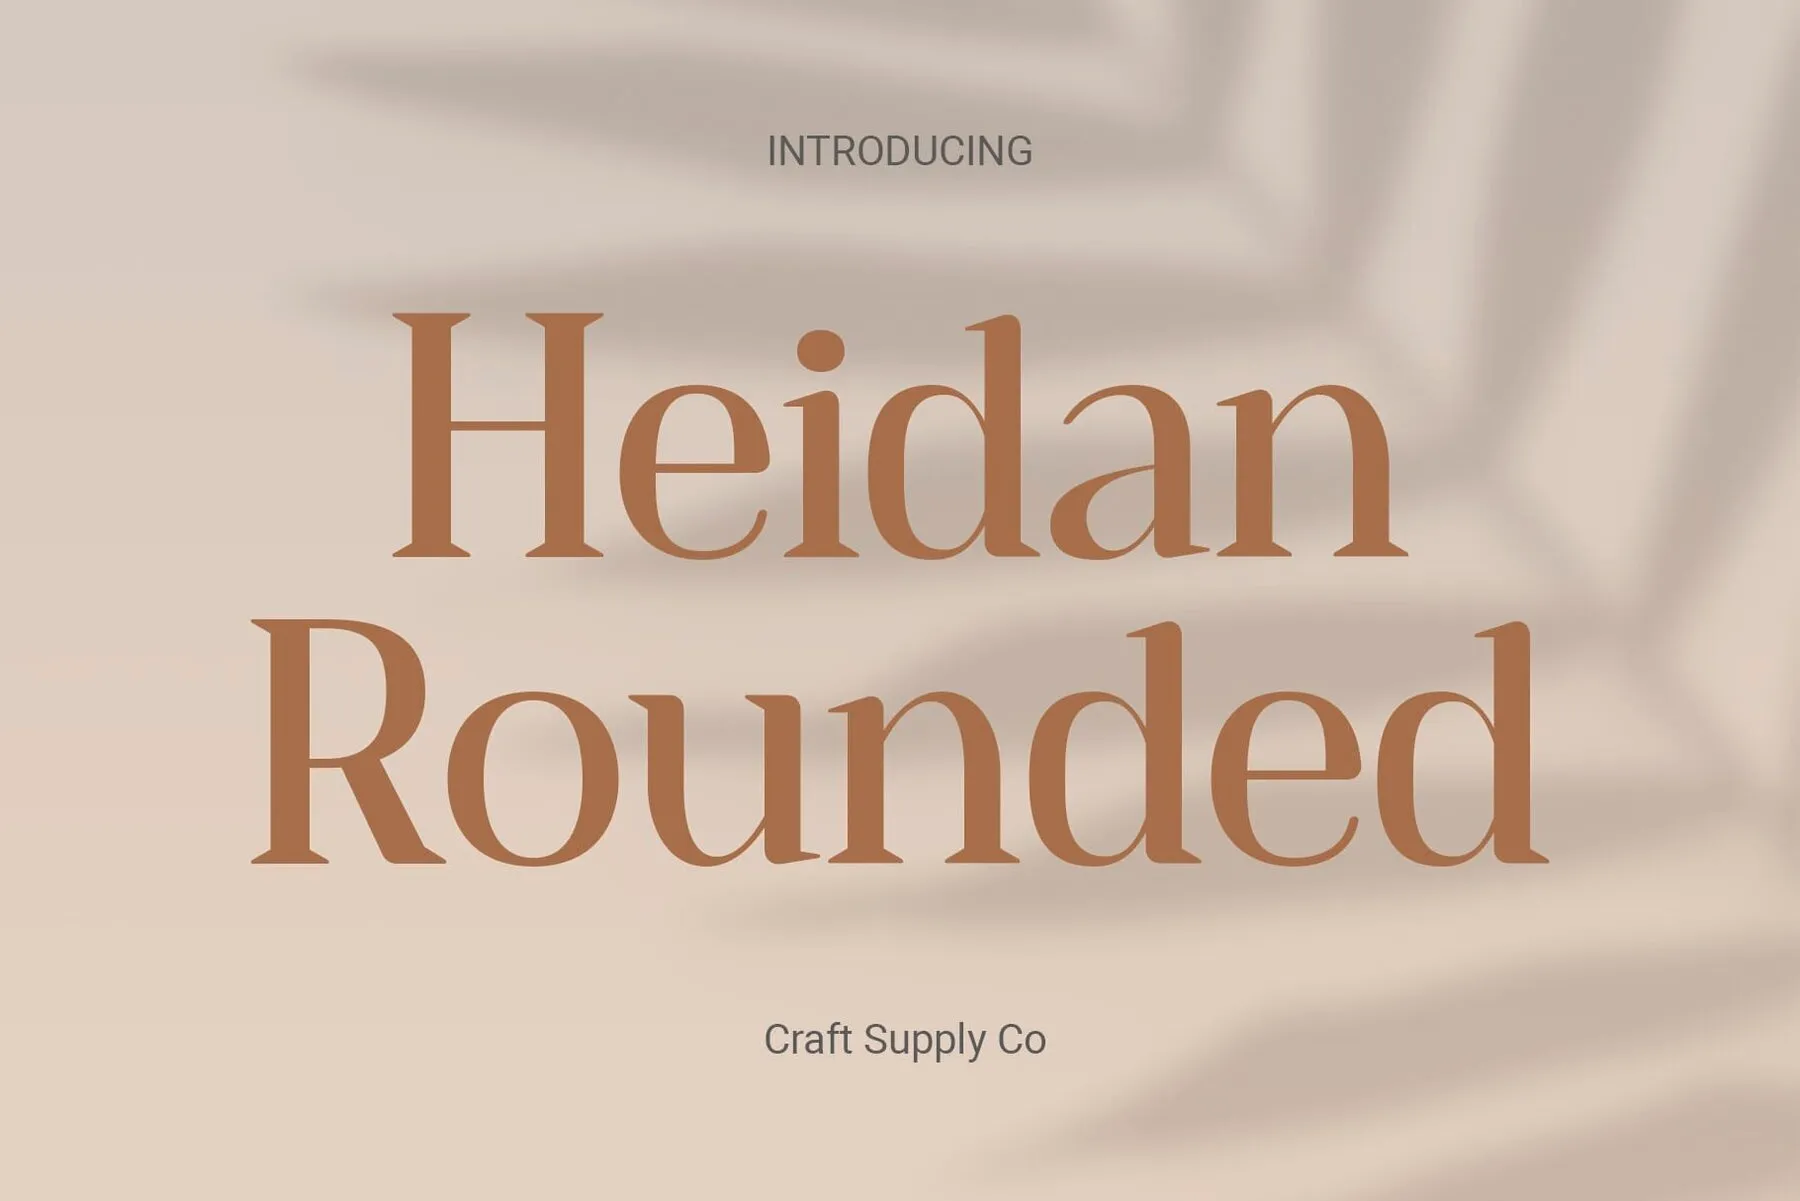 Heidan Rounded